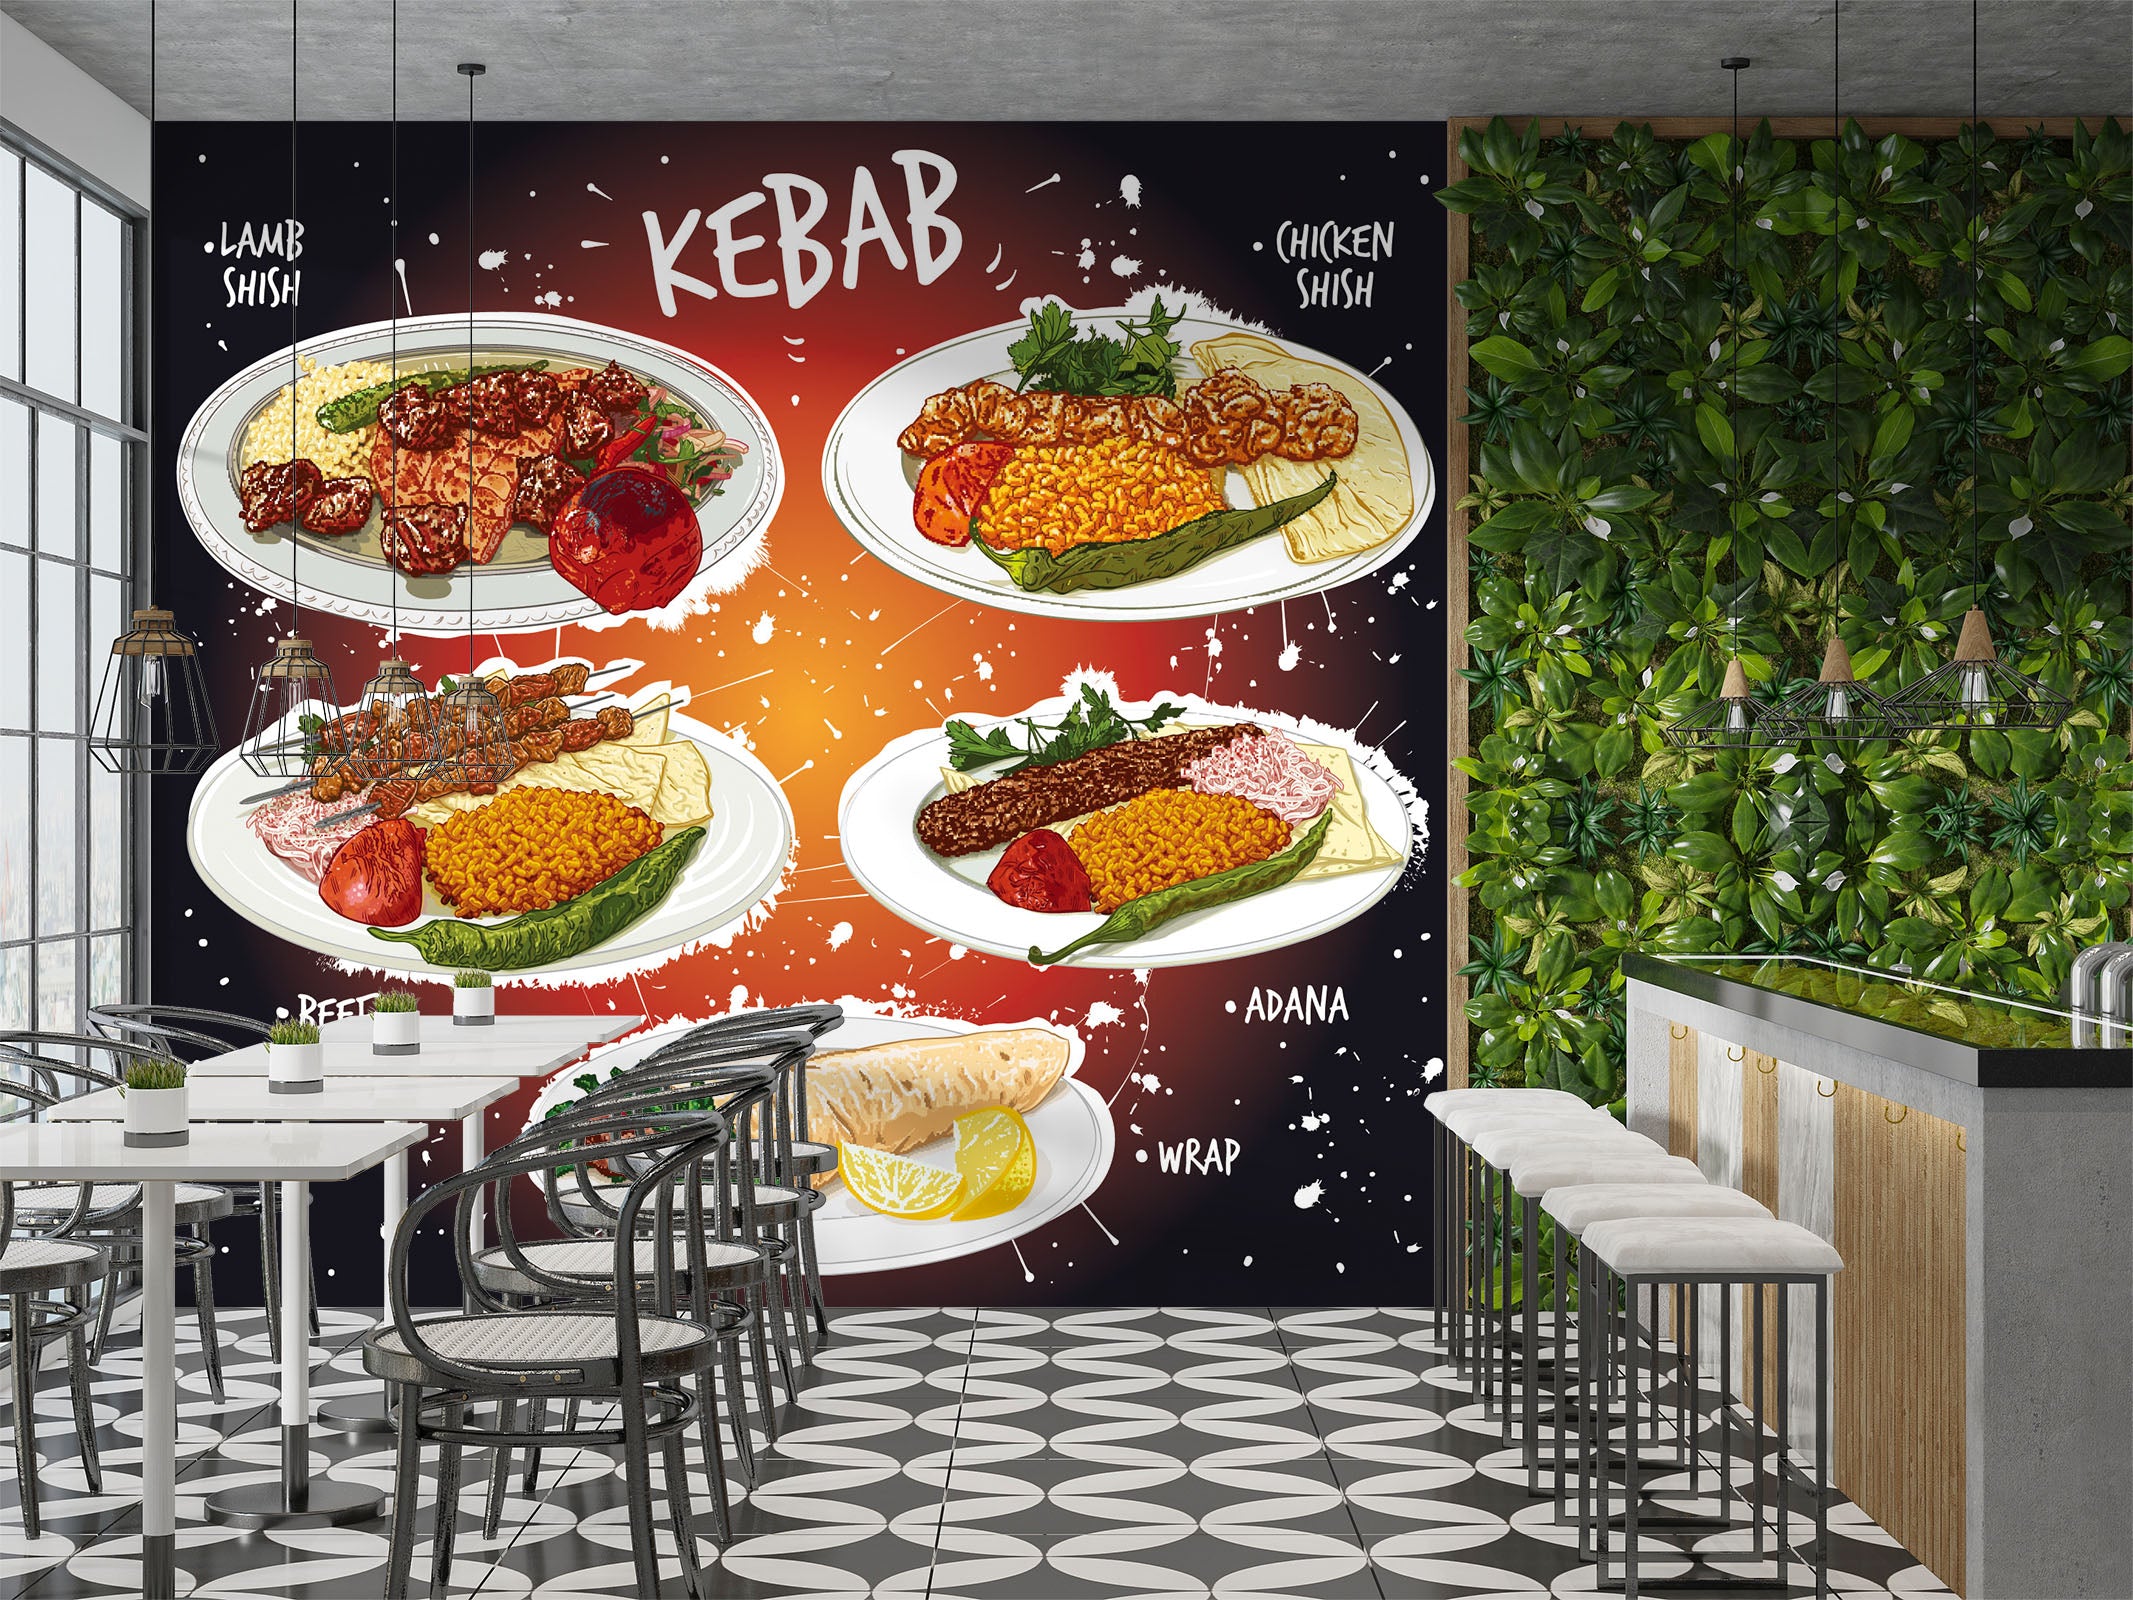 3D Grill Kebab Shop BBQ 306 Wall Mural Wall Murals Commercial